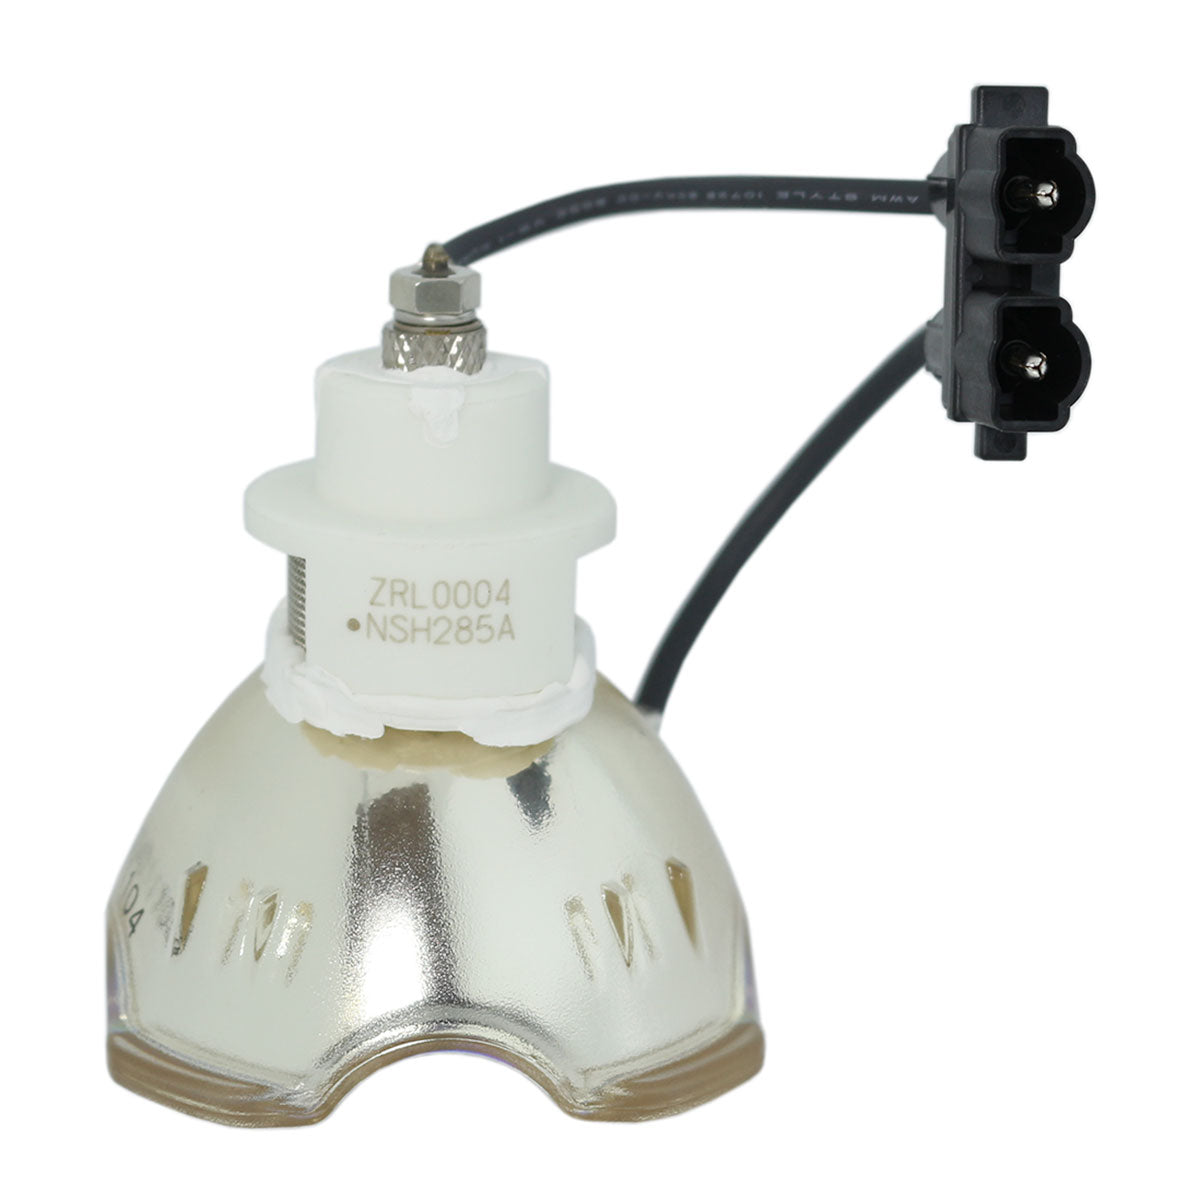 Viewsonic RLC-021 Ushio Projector Bare Lamp